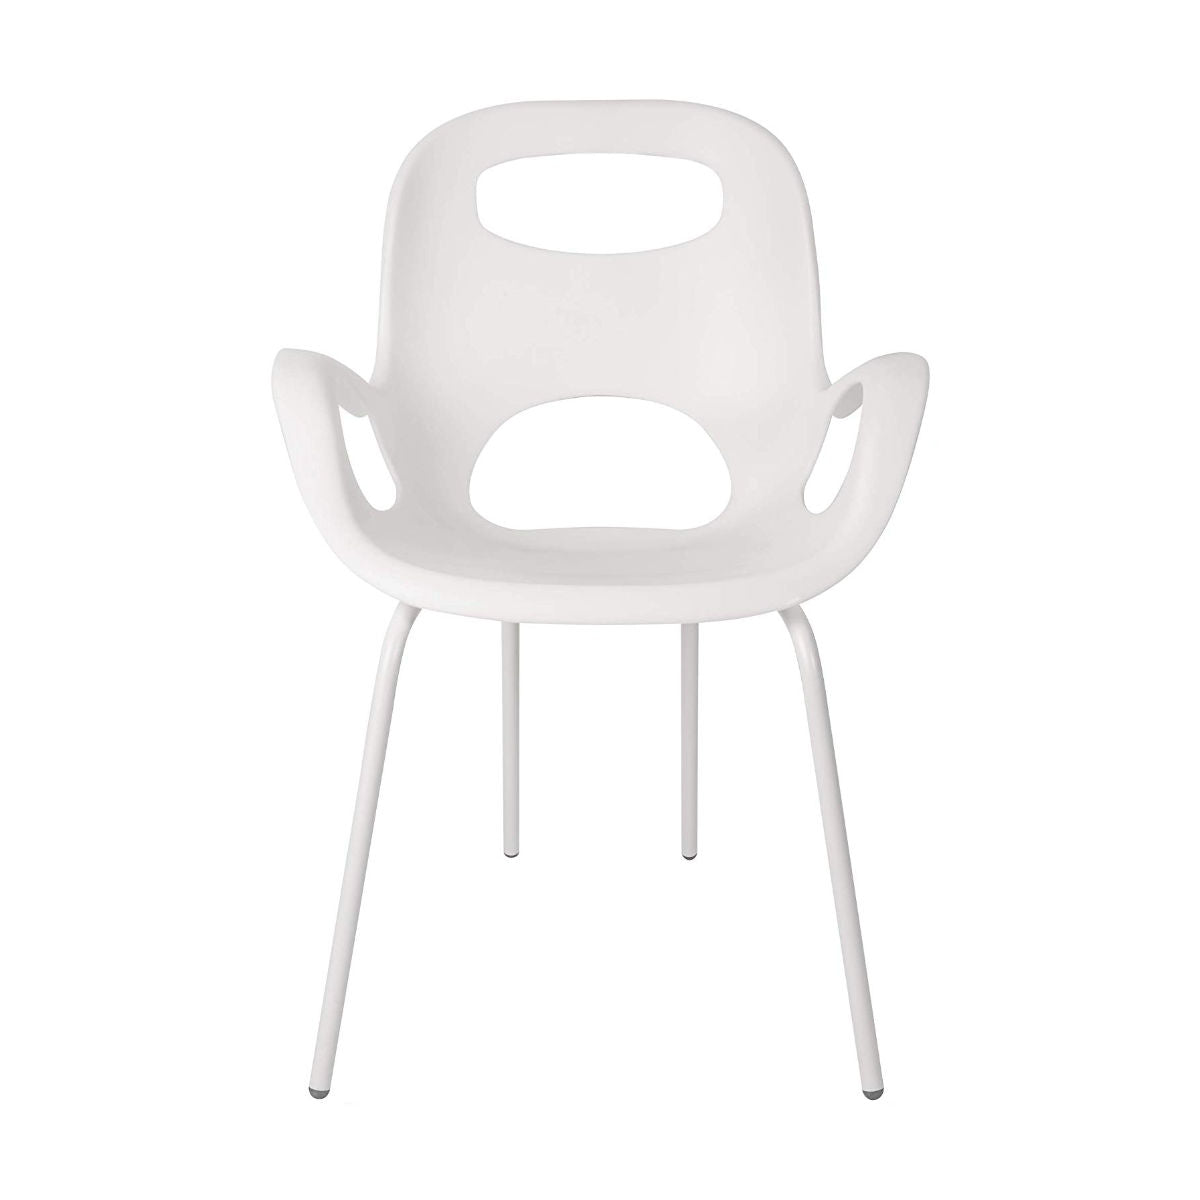 Umbra Oh chair, white